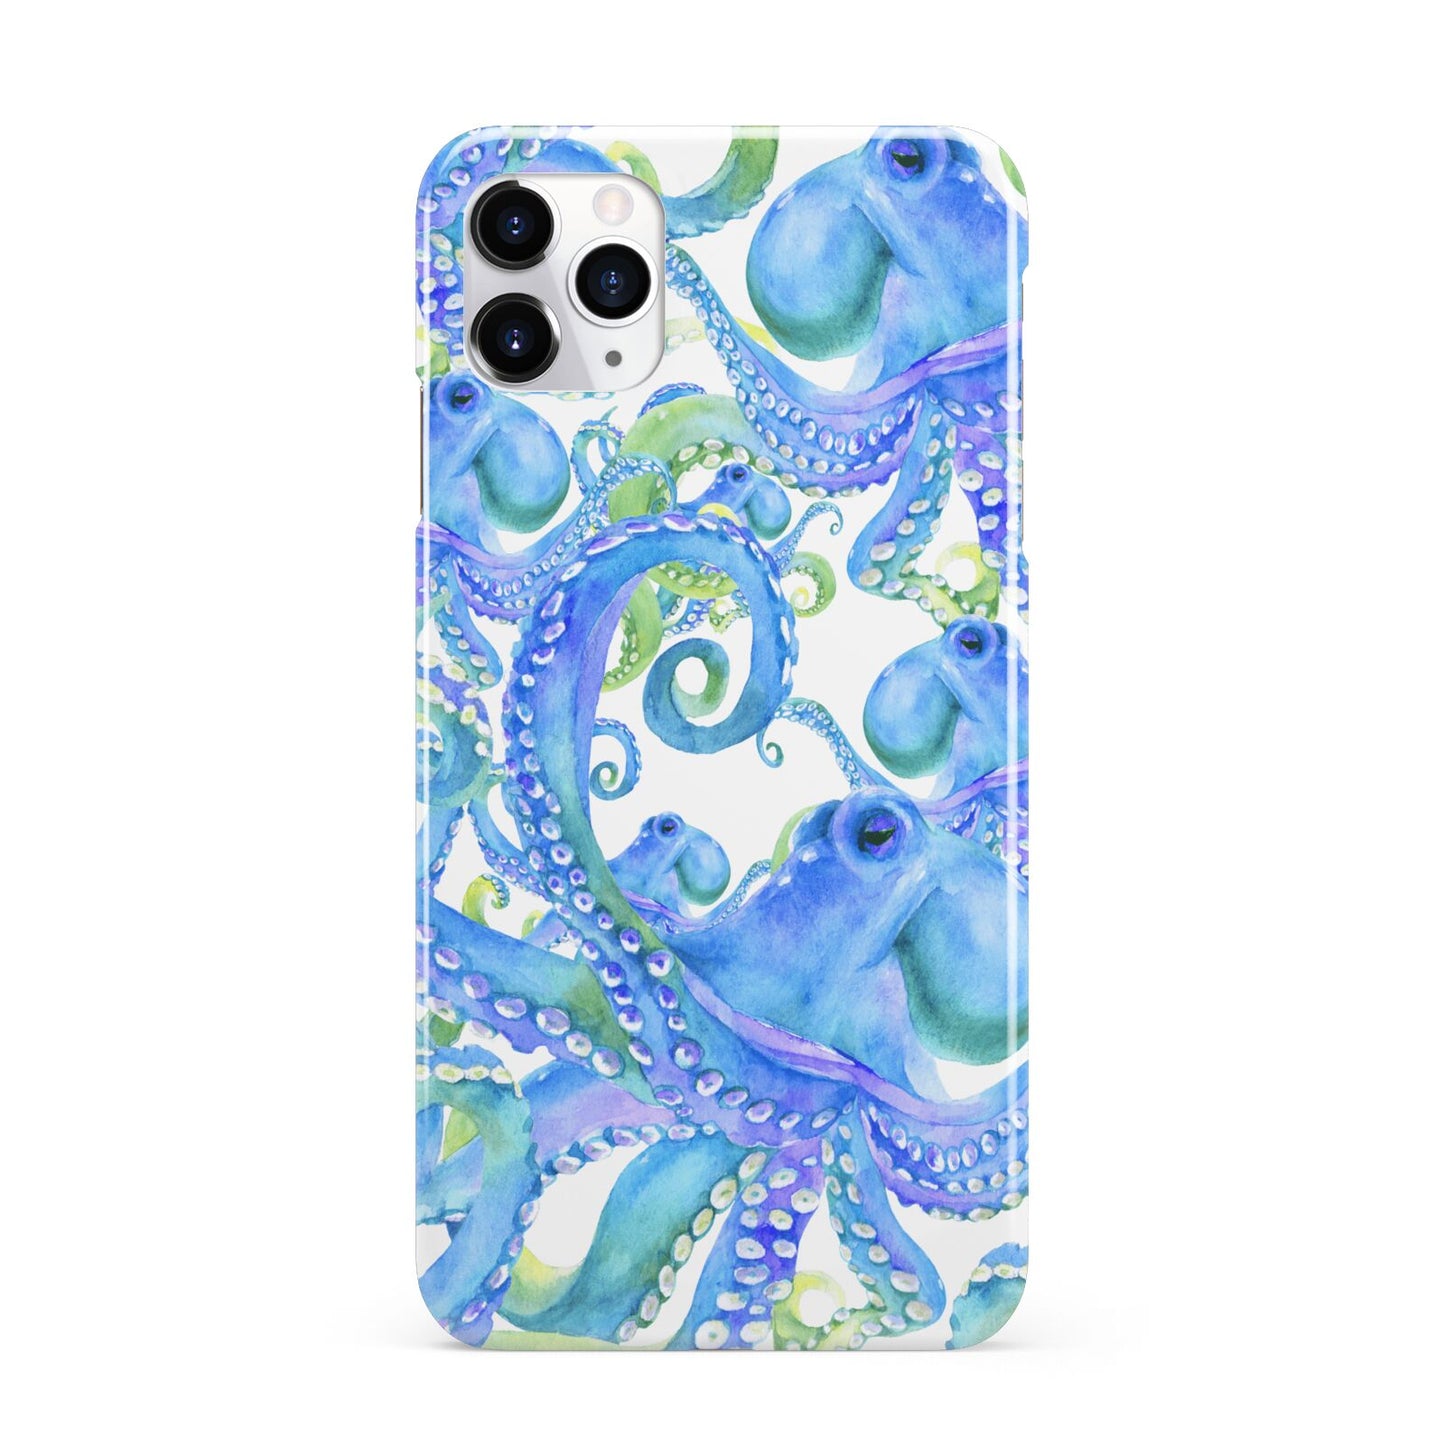 Octopus iPhone 11 Pro Max 3D Snap Case